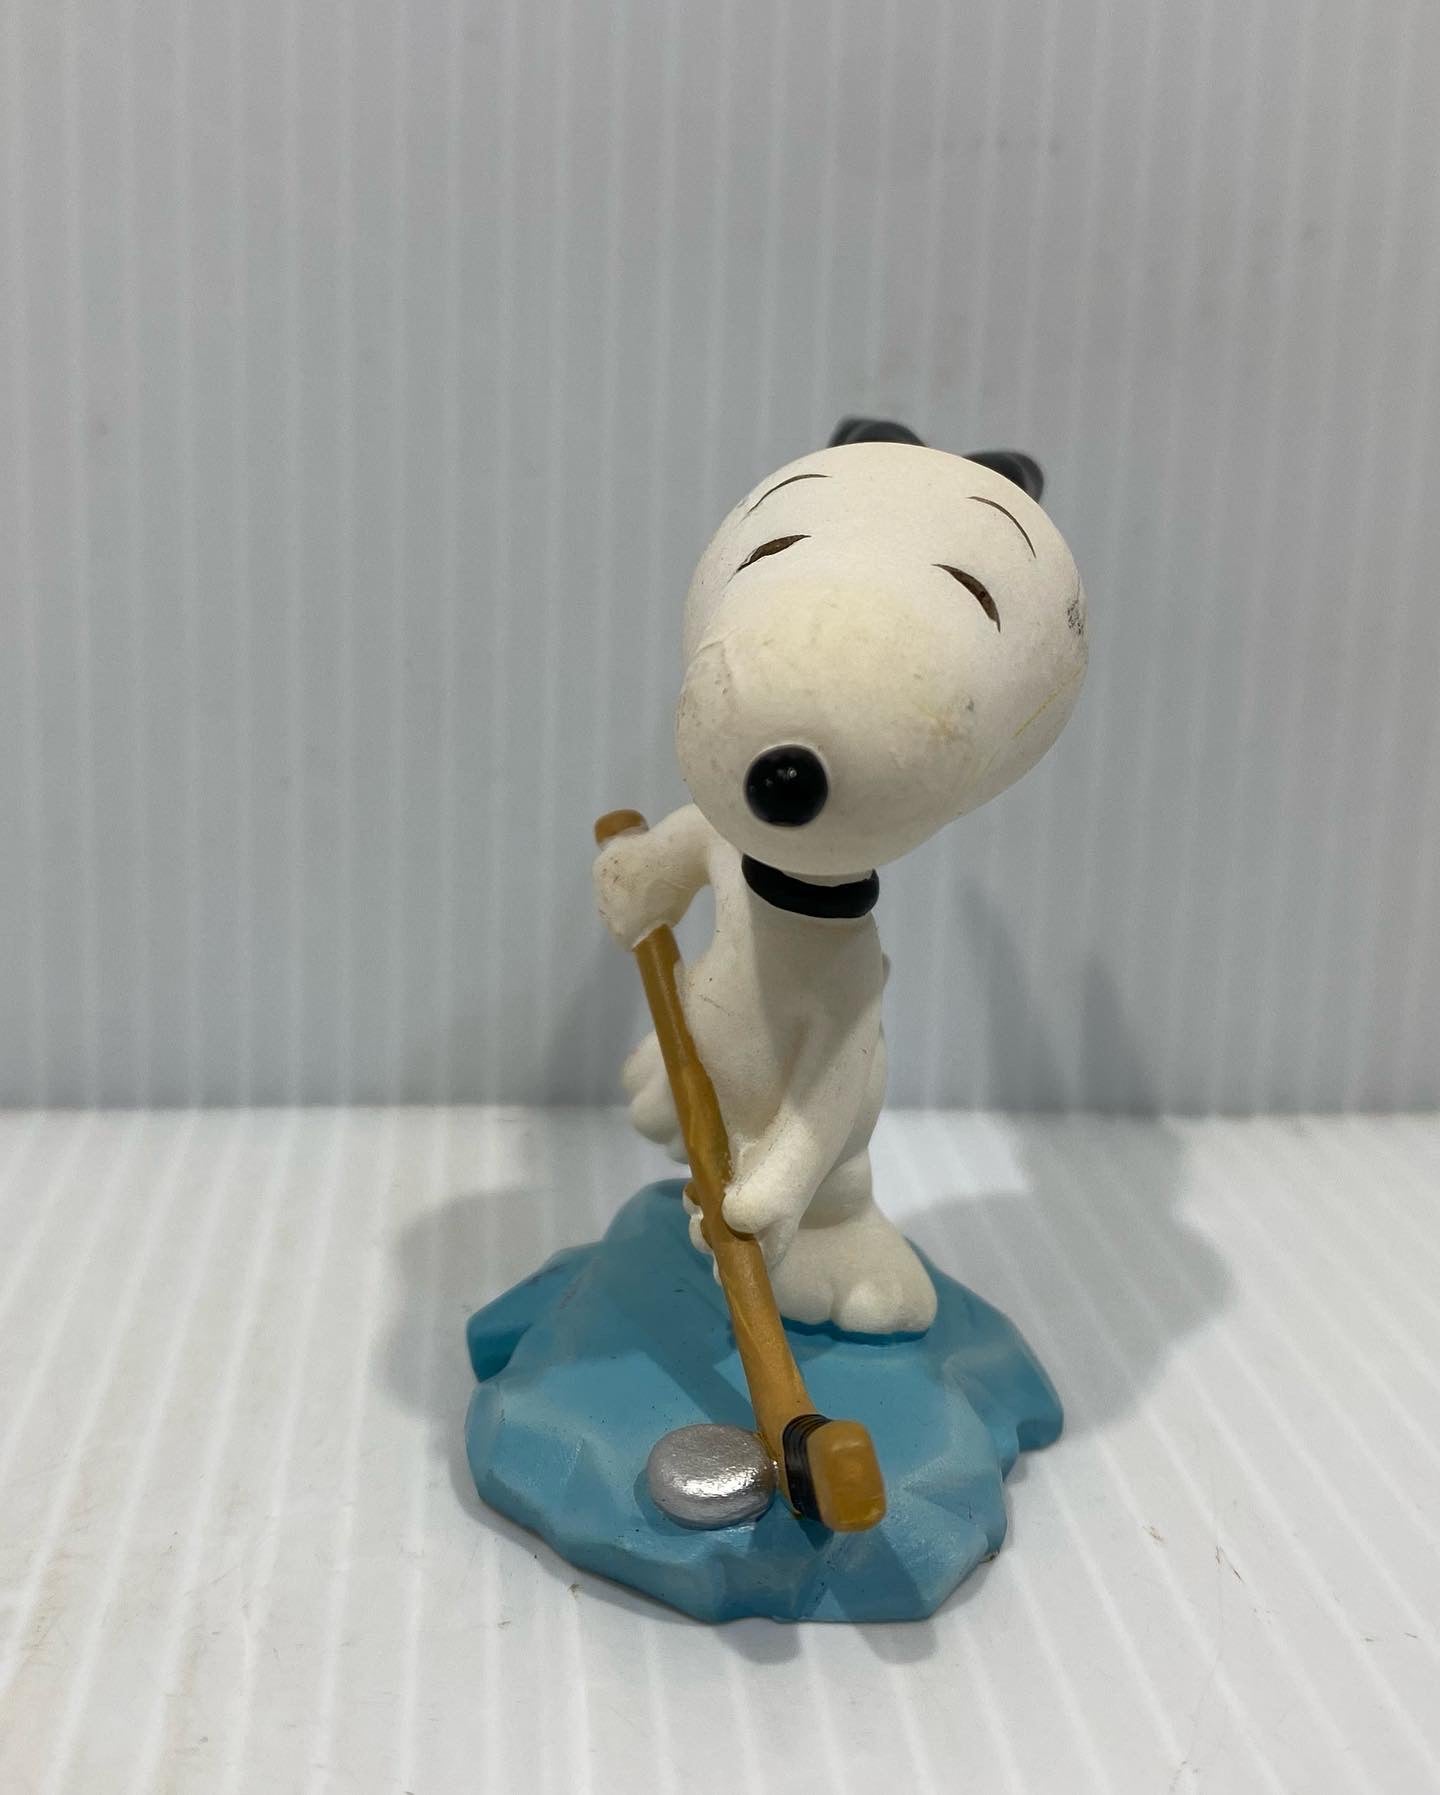 Westland Gifeware Peanuts "Snoopy Hockey" - # 8238 - in box. 50th Anniversary Figures